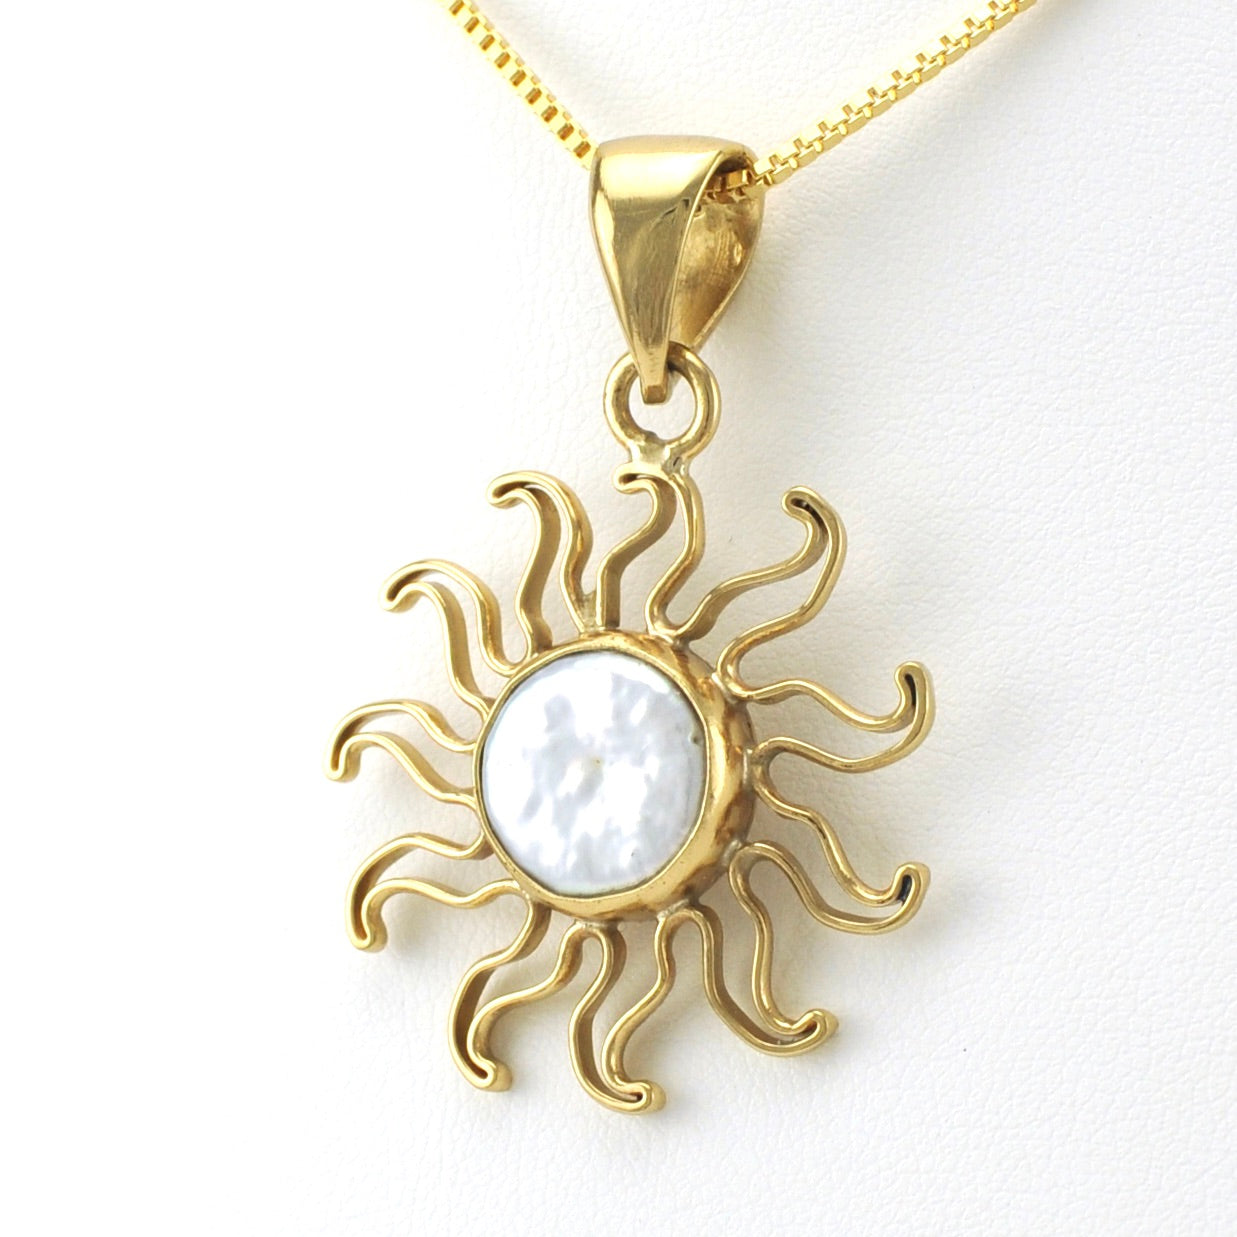 Alchemía Coin Pearl Sun Pendant